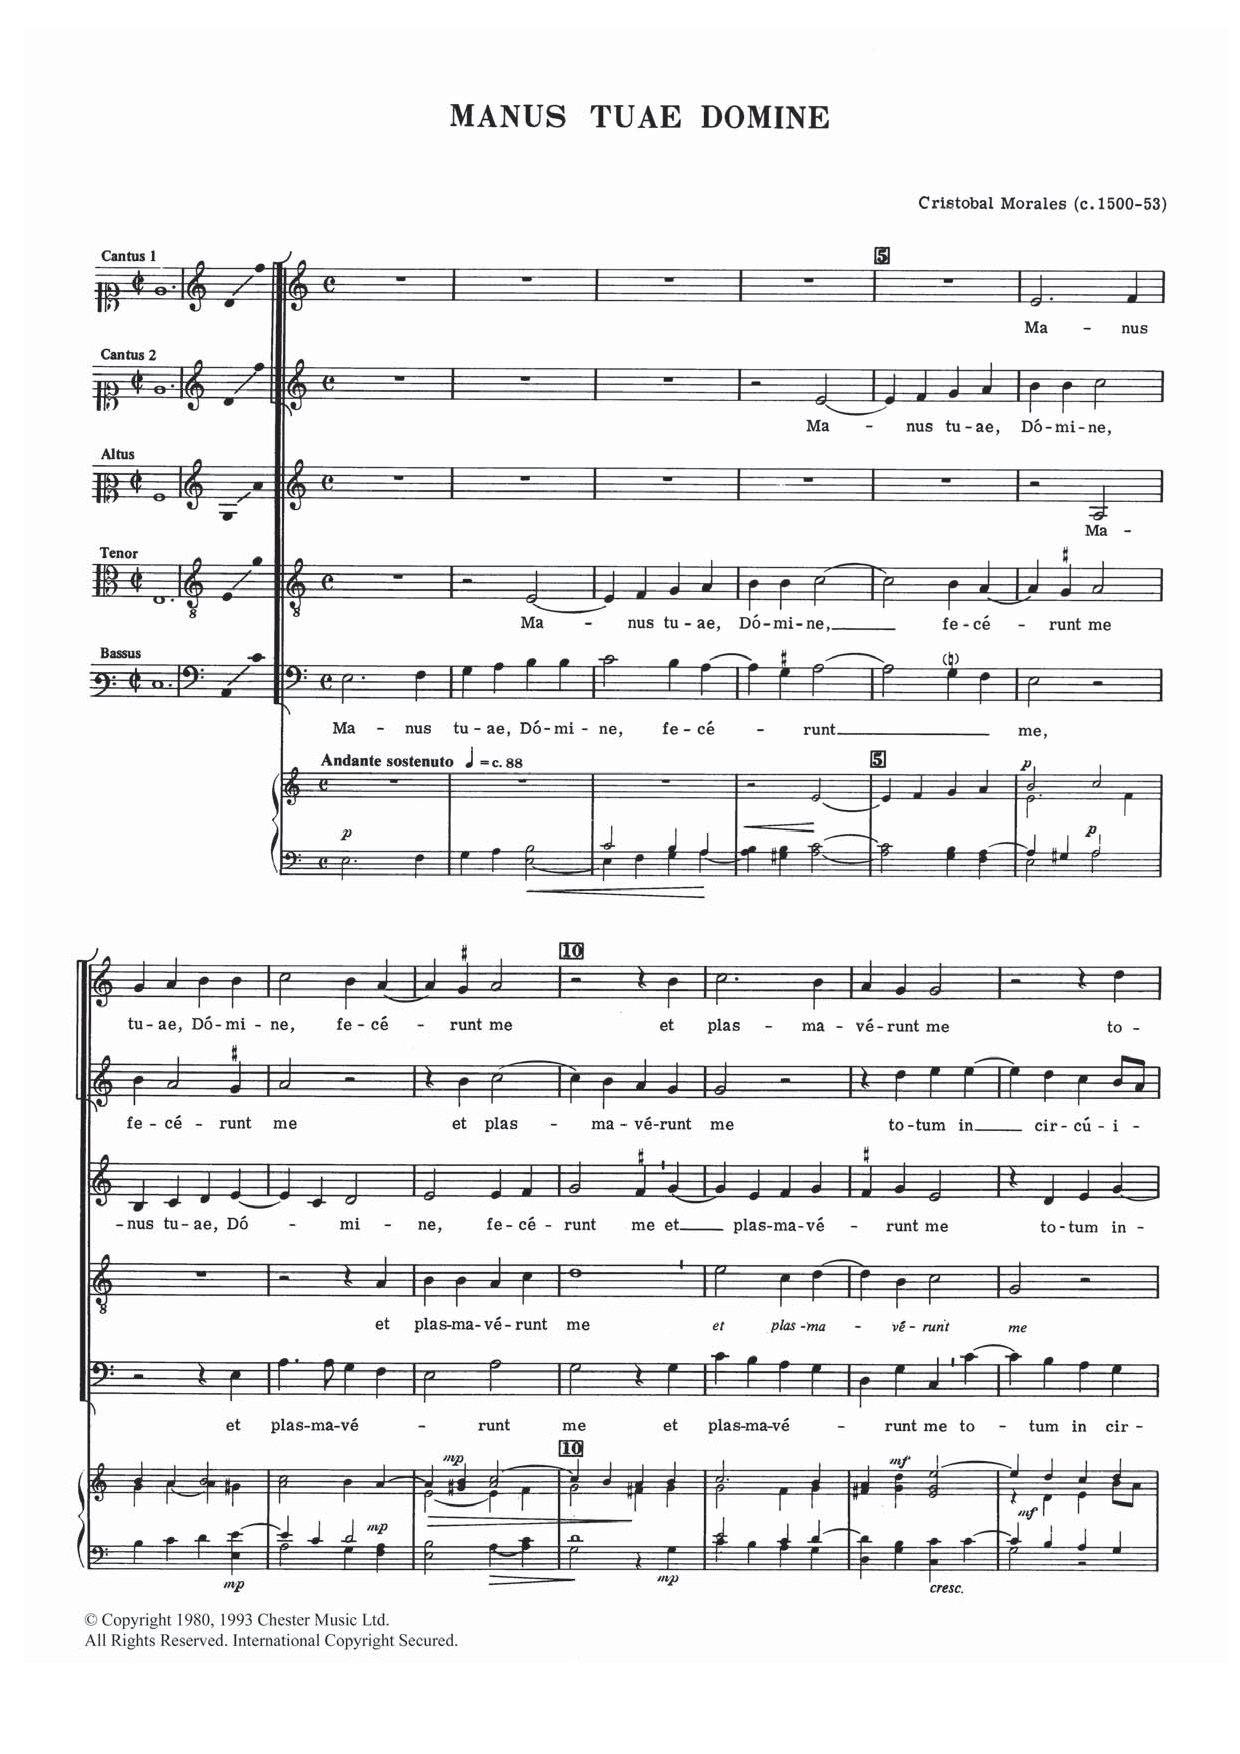 Cristobal Morales Manus Tuae Domine Sheet Music Notes & Chords for Choral SSATB - Download or Print PDF